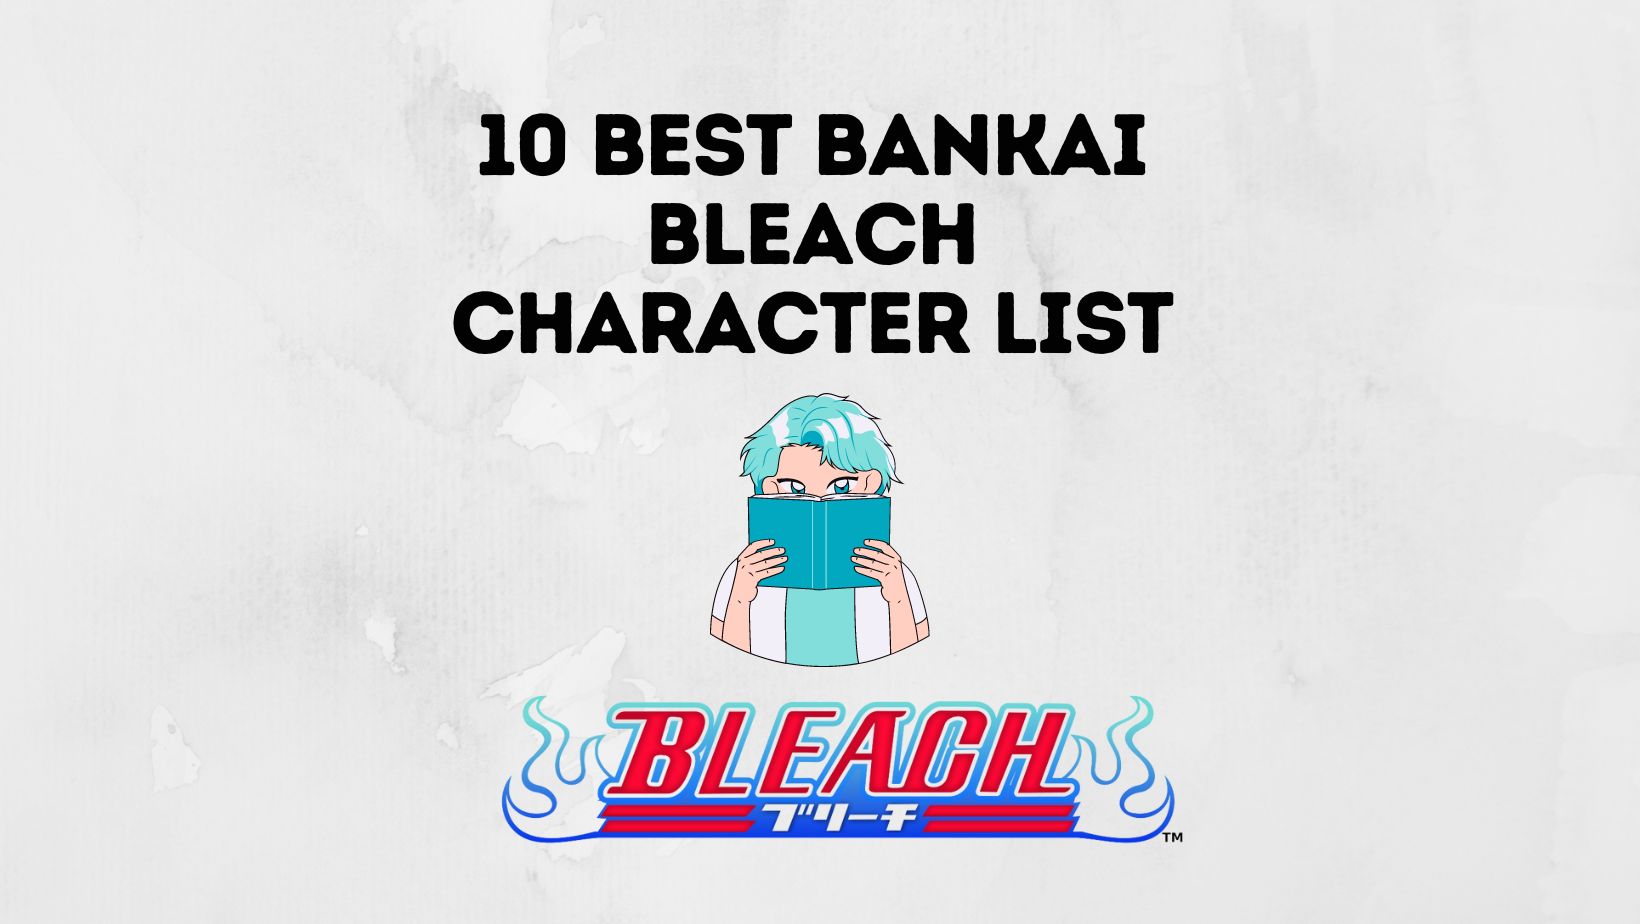 Best Bankai Bleach Character List